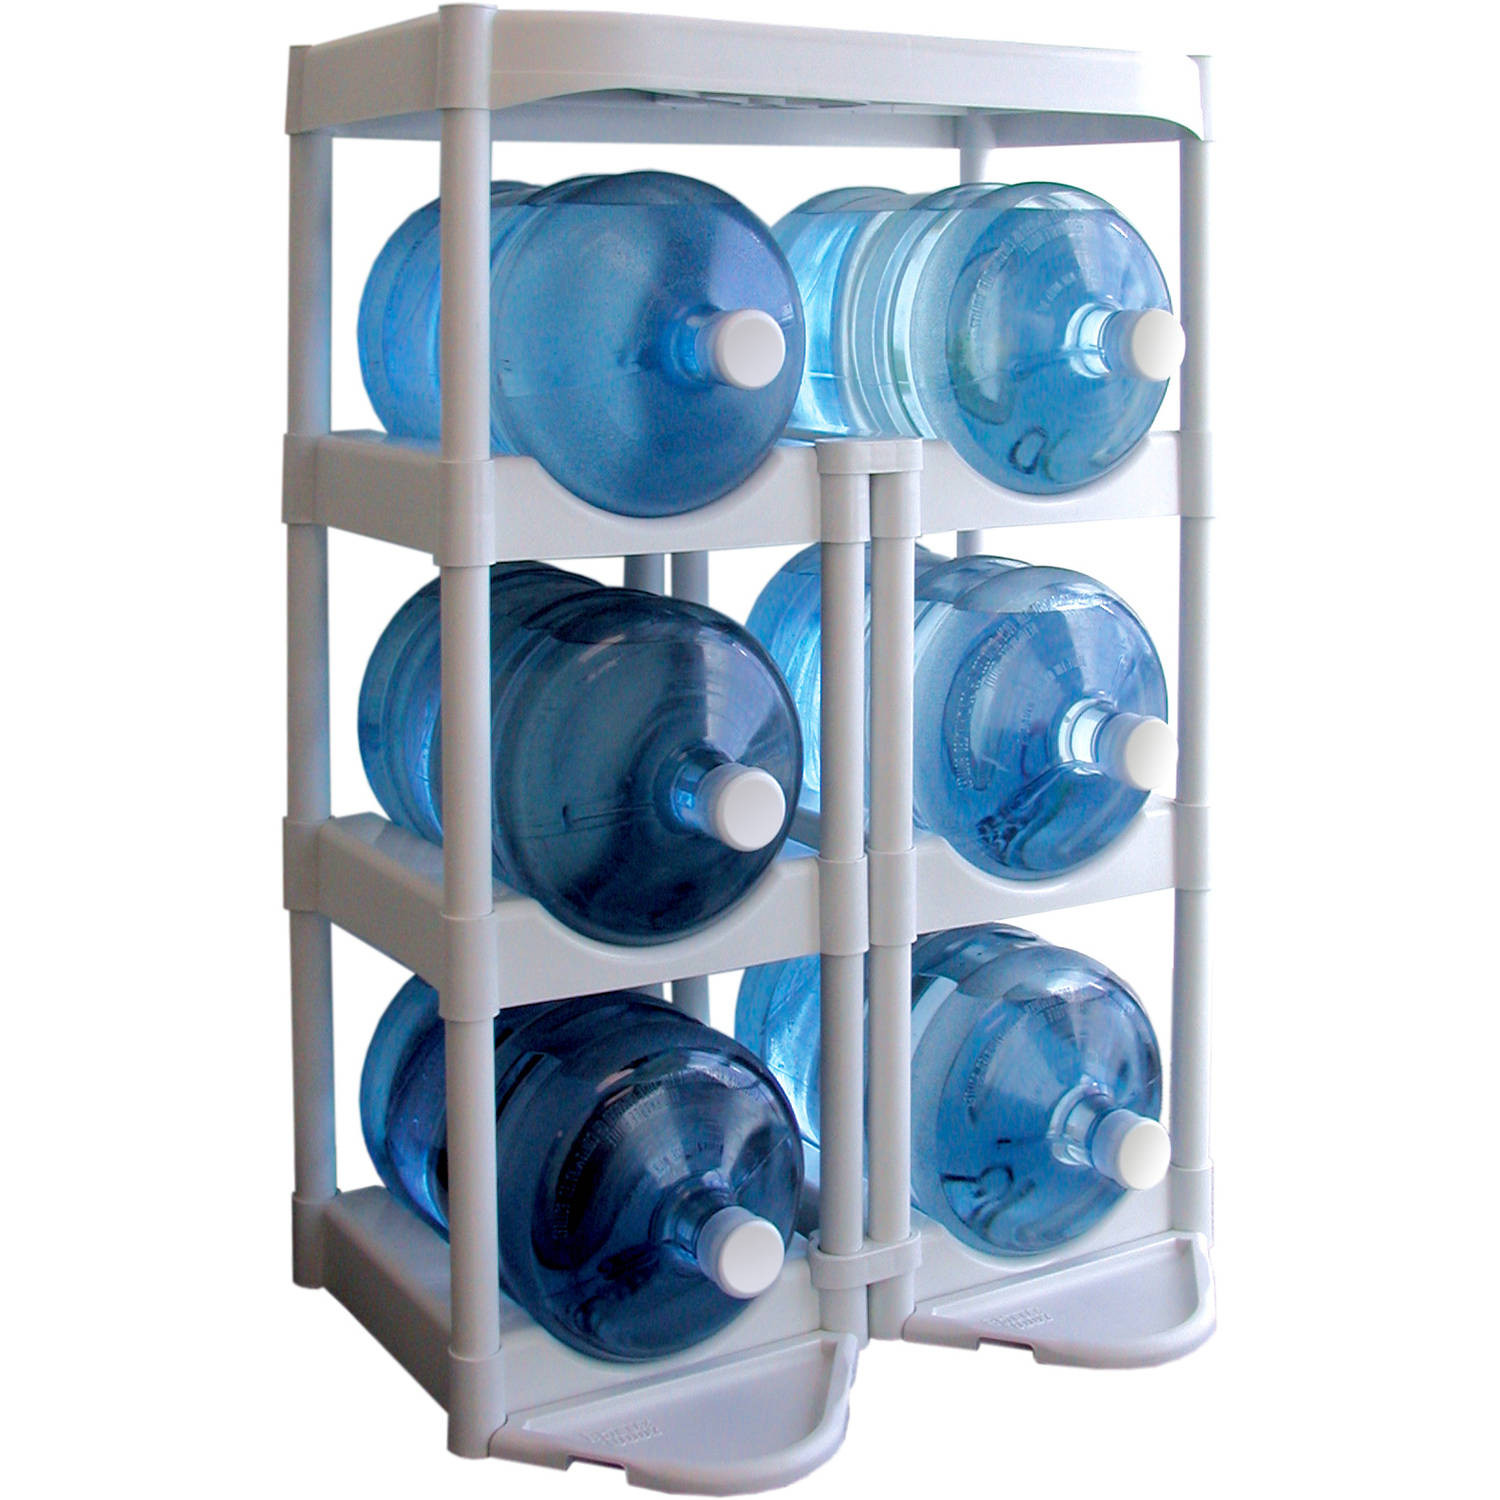 DIY 5 Gallon Water Bottle Rack
 5 Gallon Water Bottle Holder Shelves Storage Rack Storage